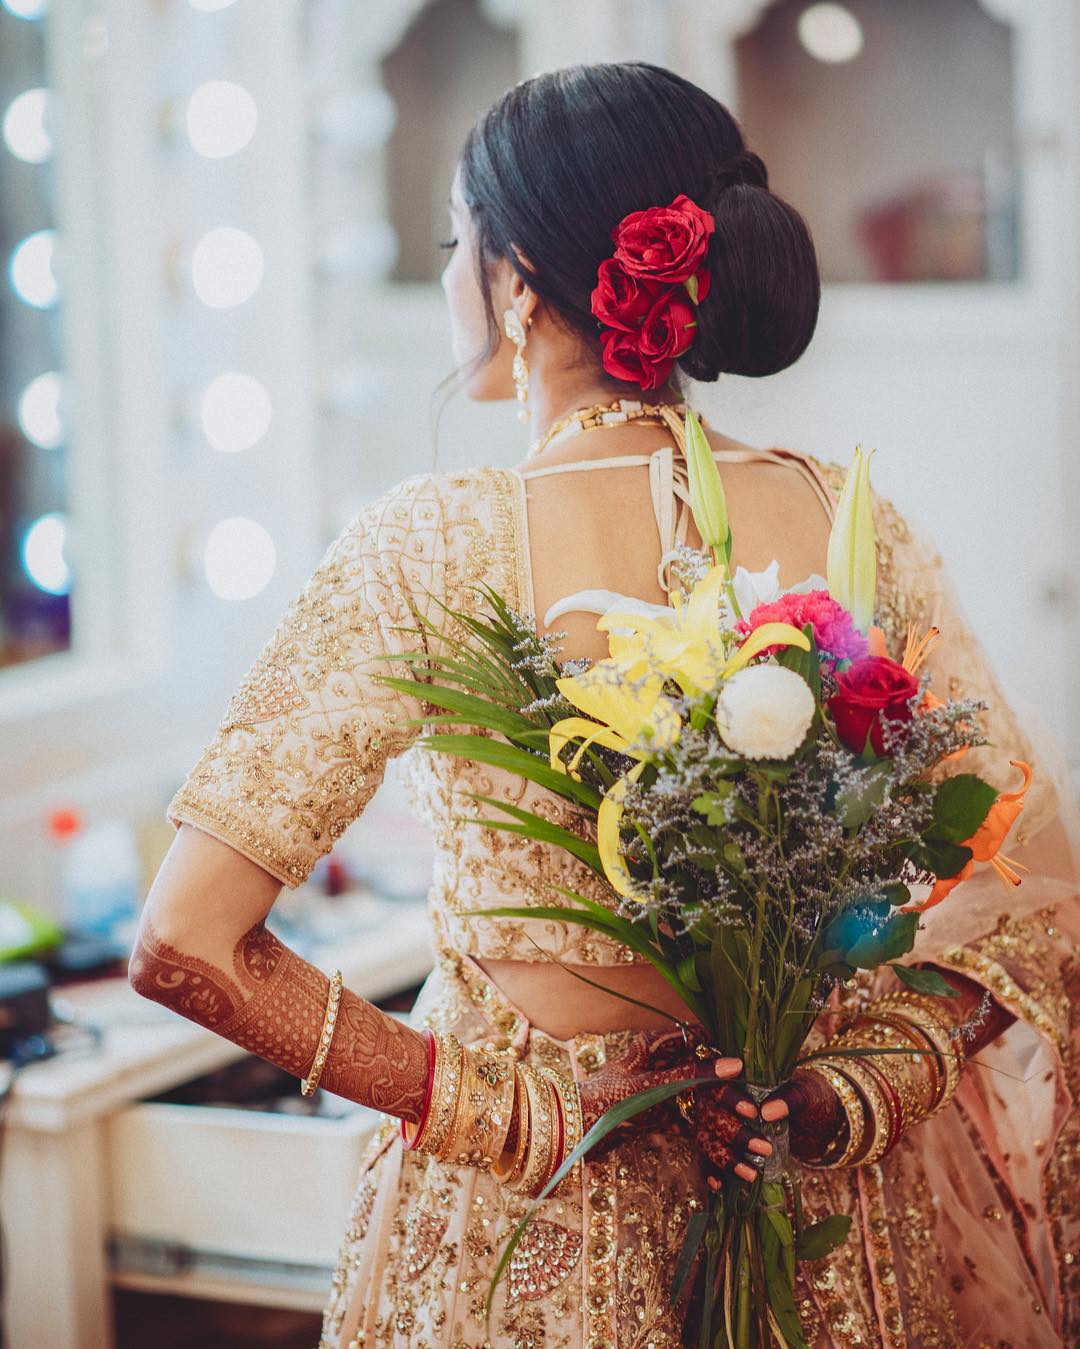  Minimalism: Floral Bun Hairstyles for Brides this Wedding Season